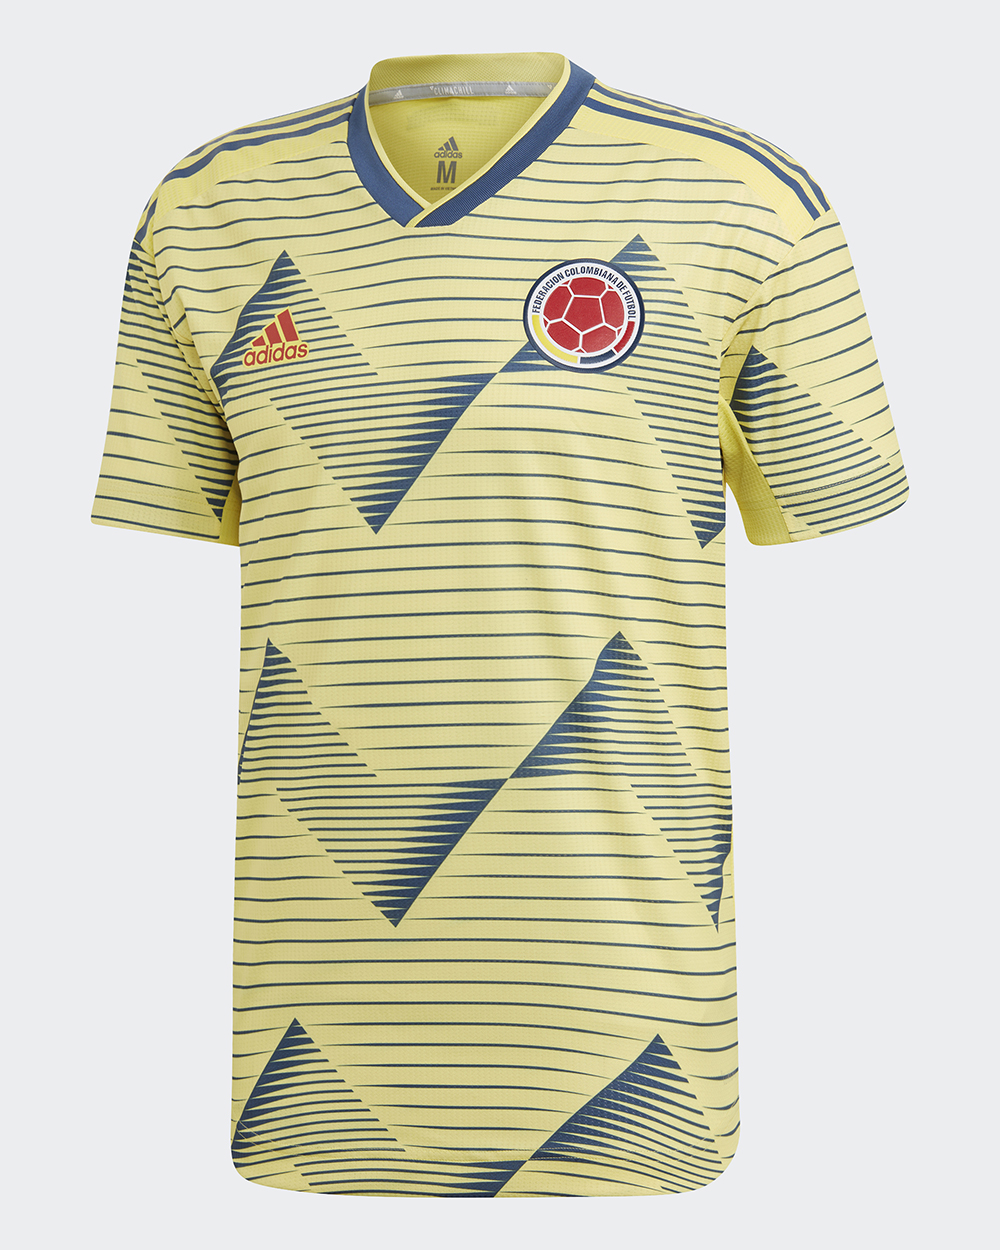 Camiseta adidas de Colombia Copa América 2019 Frente